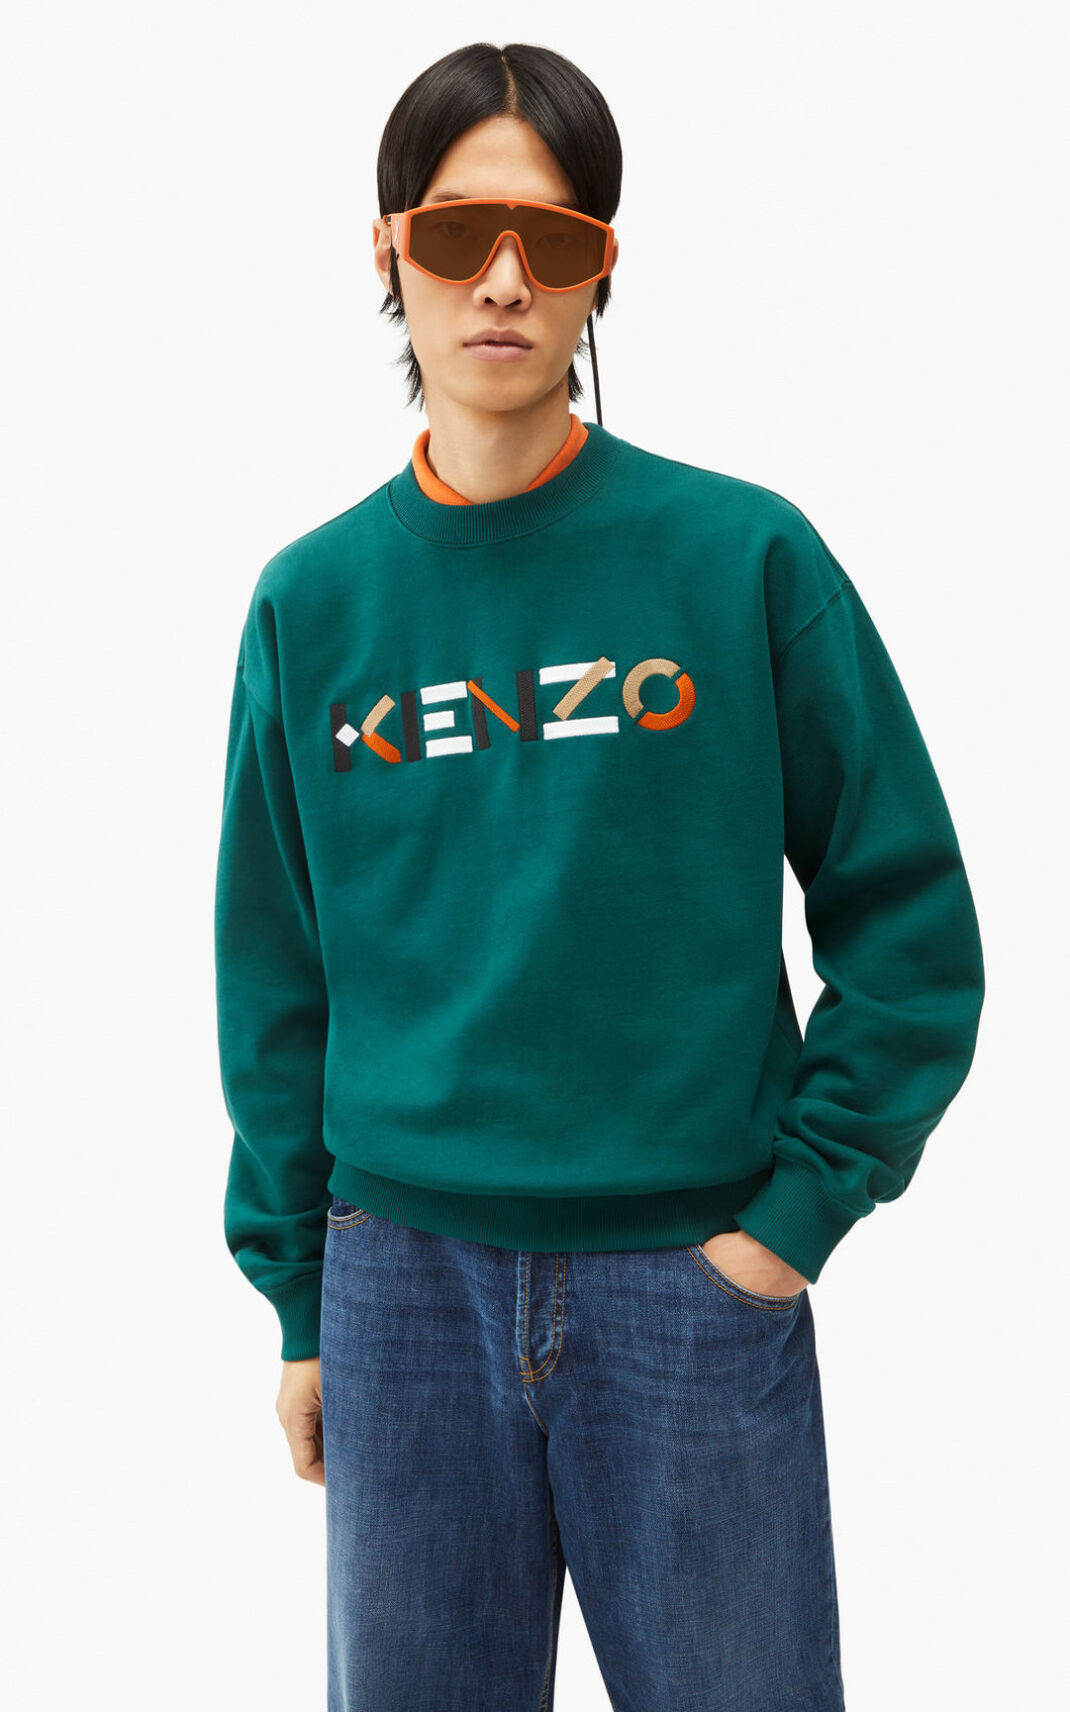 Kenzo Logo oversized multicoloured スウェット メンズ 青 - IYAODJ610